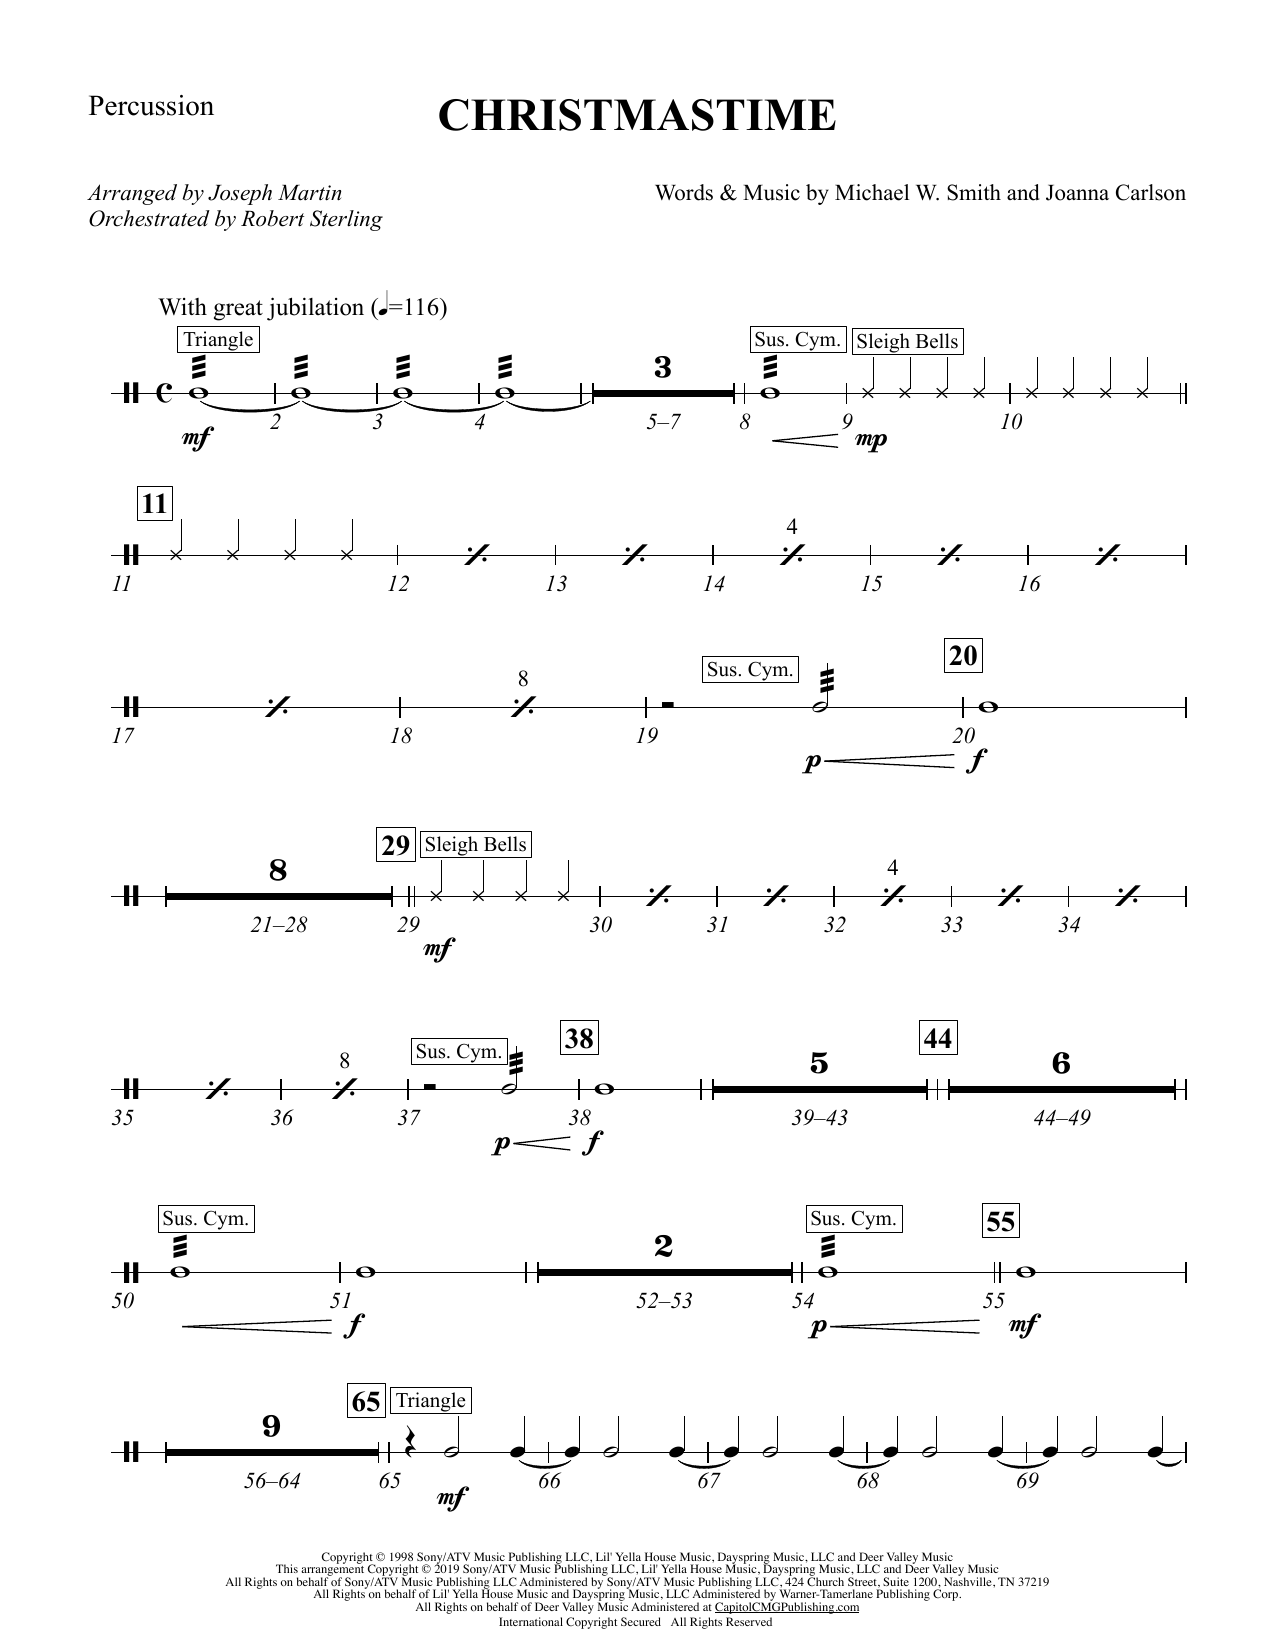 Michael W. Smith & Joanna Carlson Christmastime (arr. Joseph M. Martin) - Percussion Sheet Music Notes & Chords for Choir Instrumental Pak - Download or Print PDF